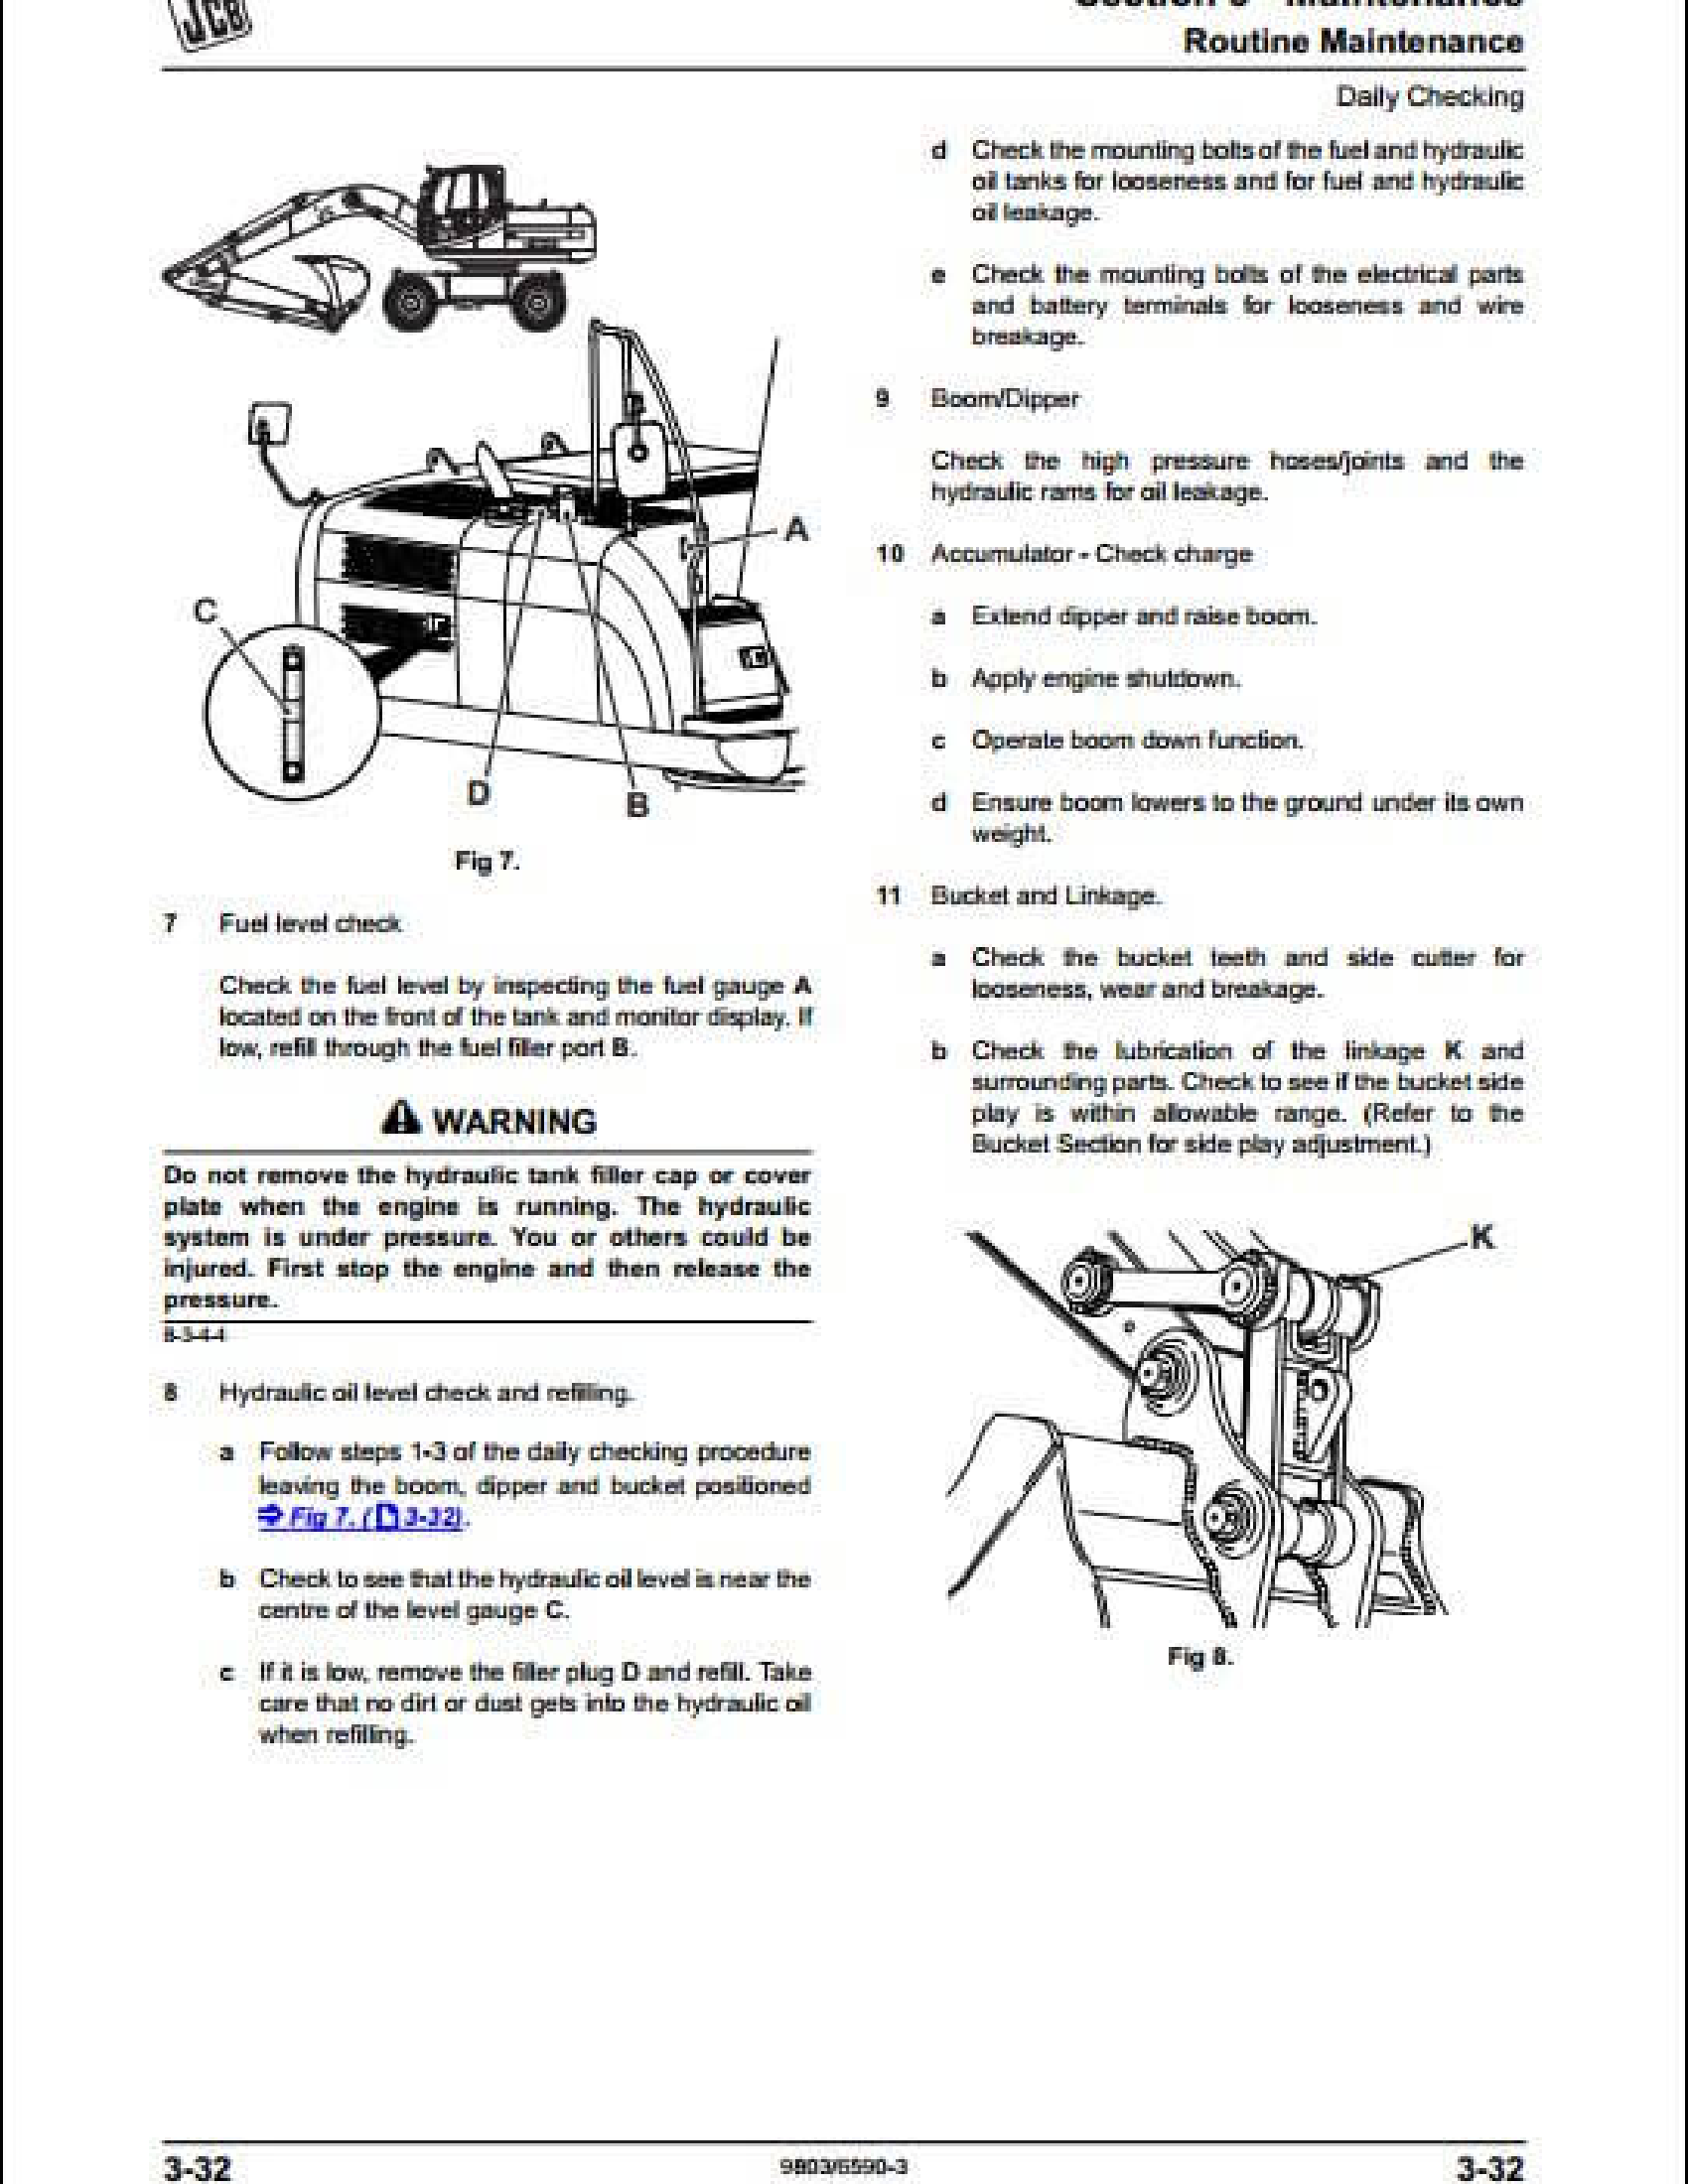 JCB 528-70 Rear Engine Loadalls manual